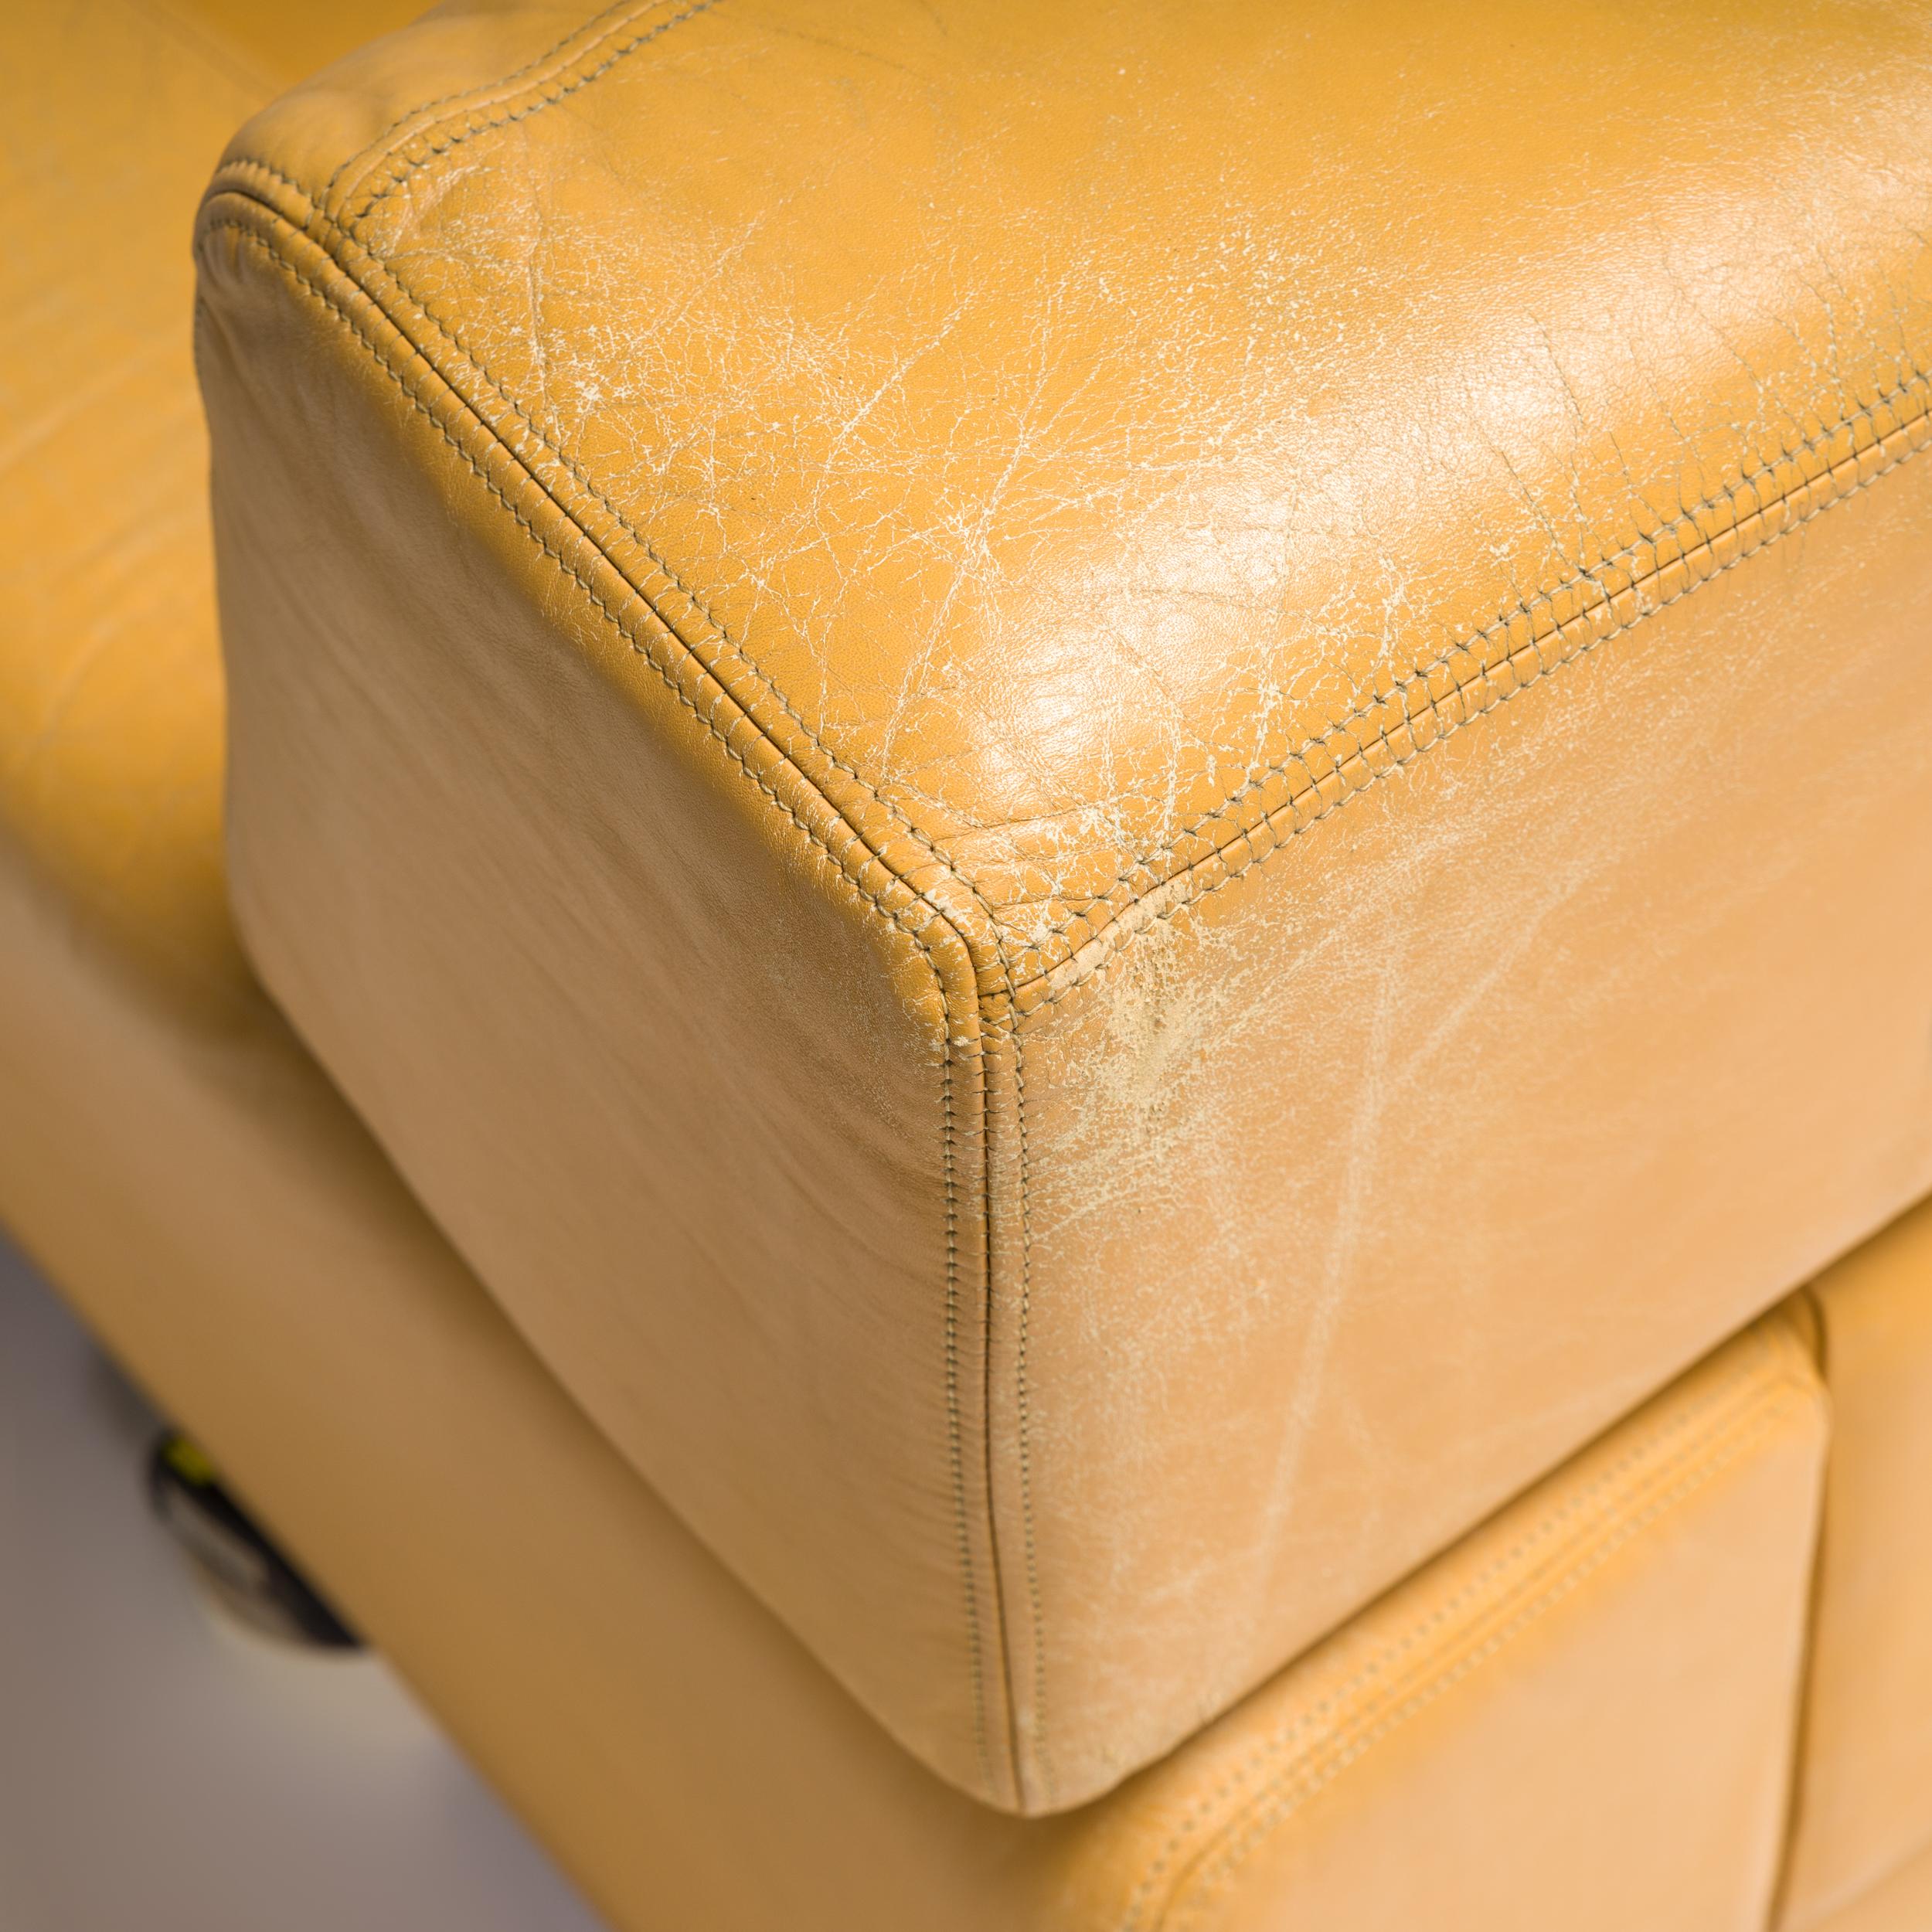 Percival Lafer Yellow Leather 2 Seat Sofa, circa 1960 For Sale 7